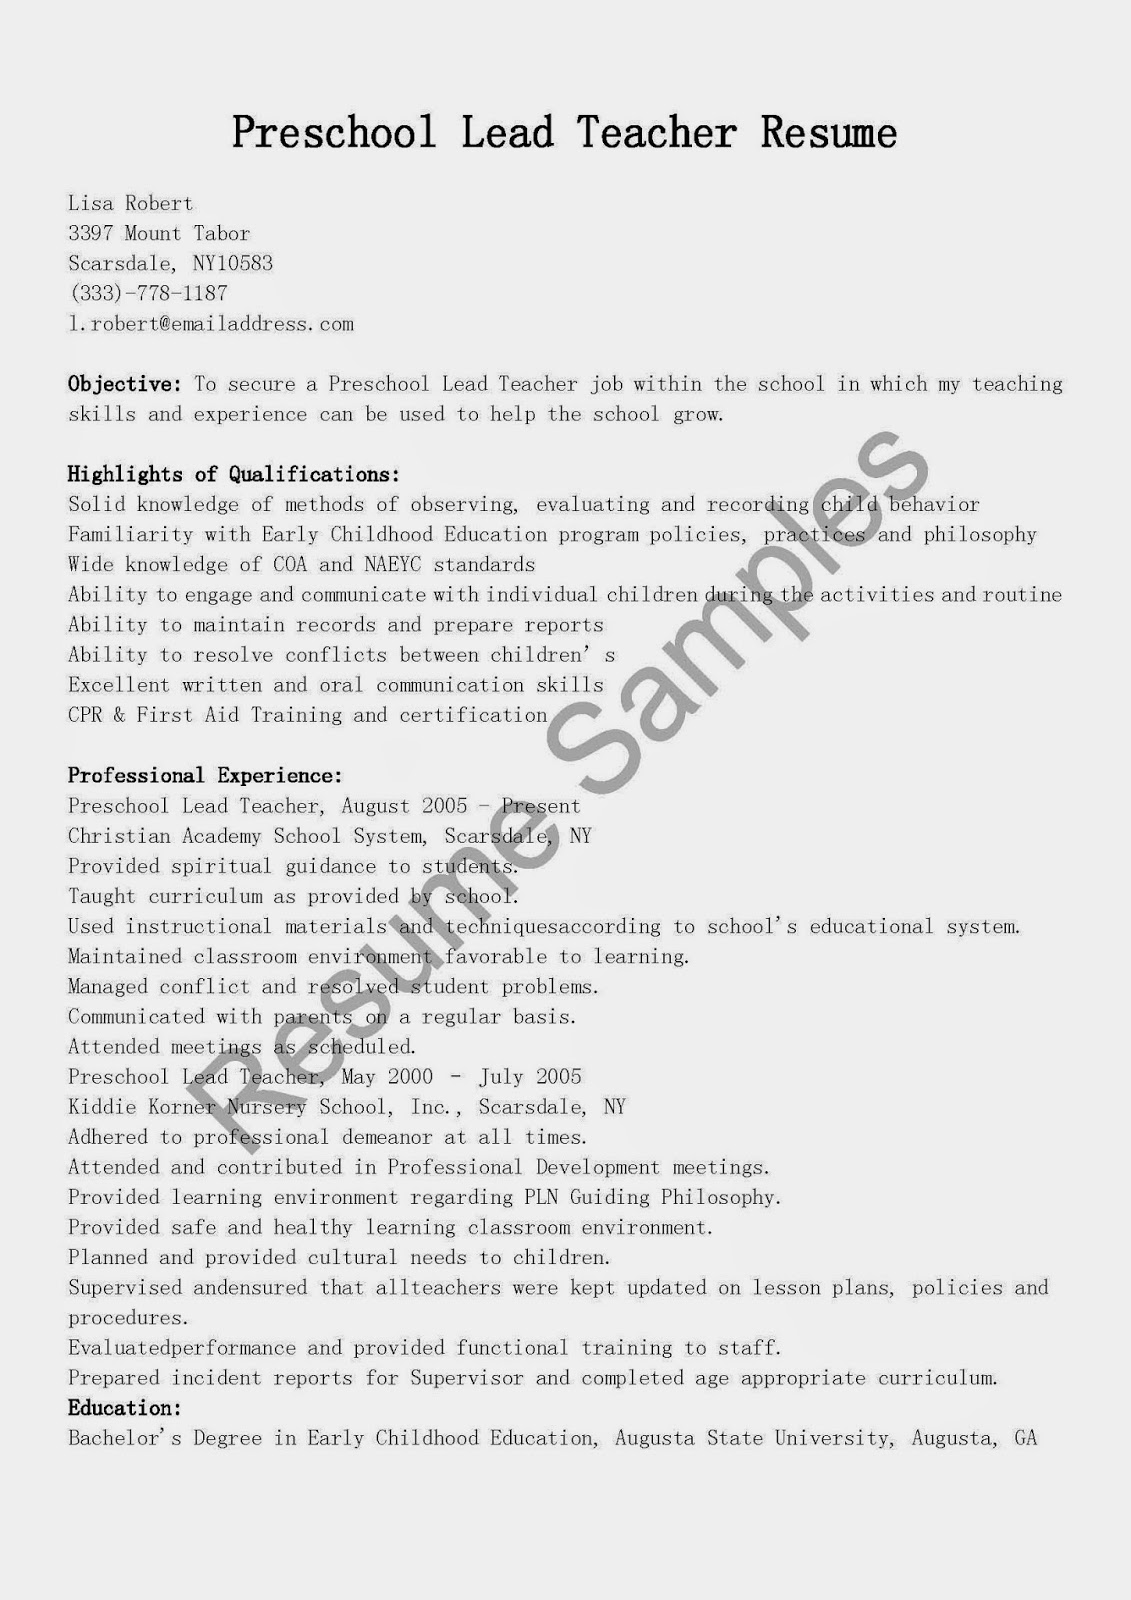 Federal resume samples ksa